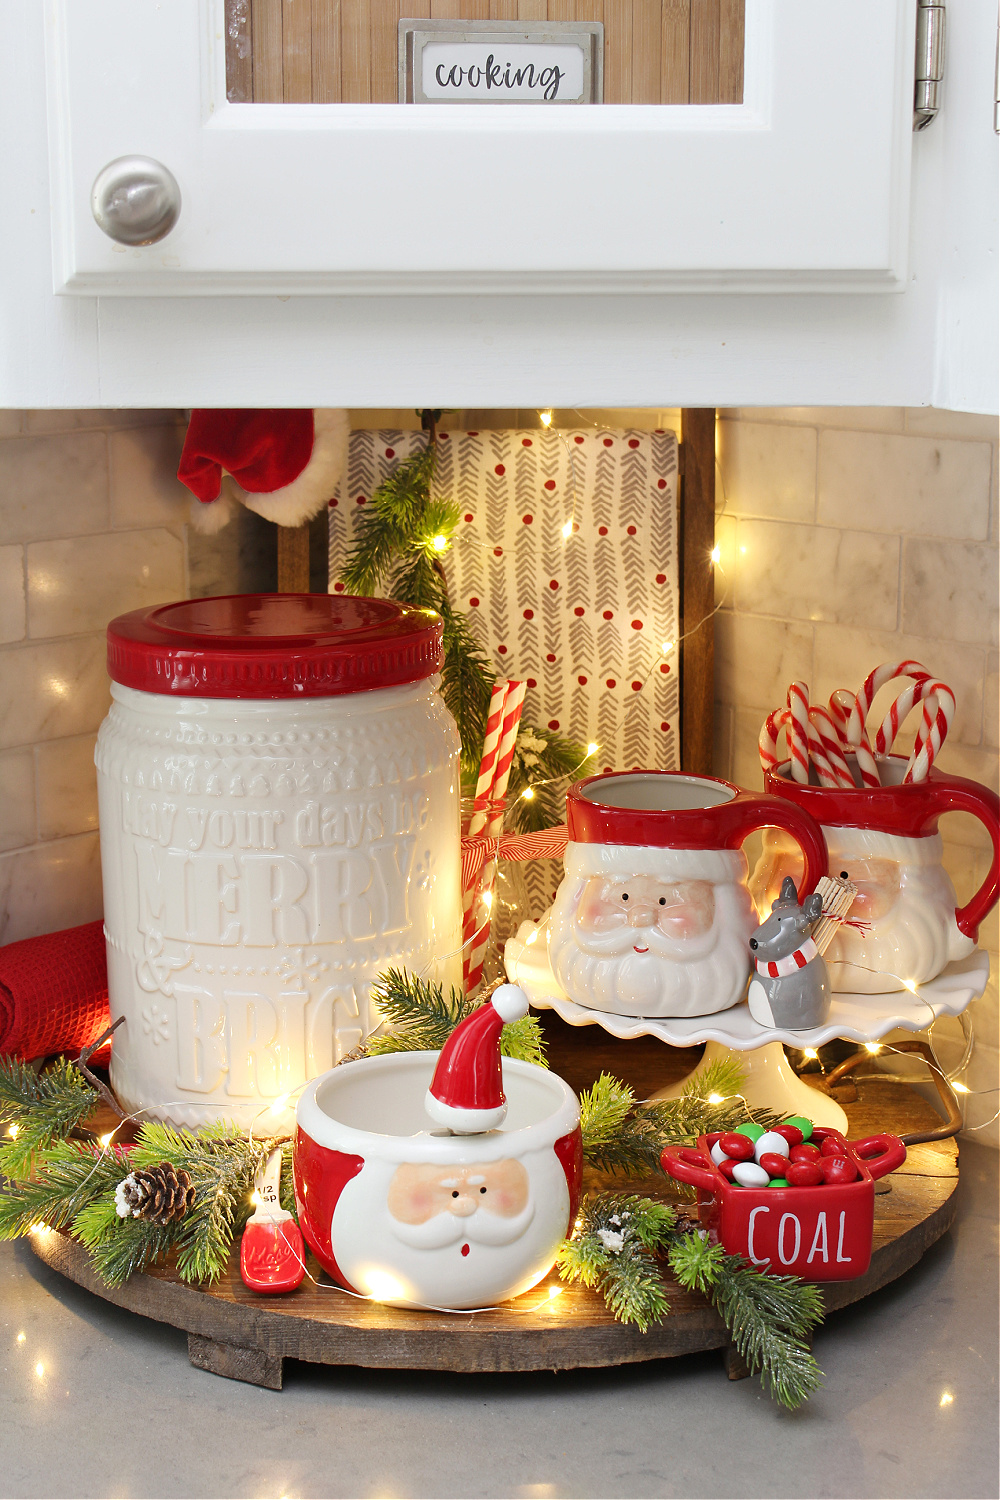 Christmas Santa mug display in a Christmas kitchen.